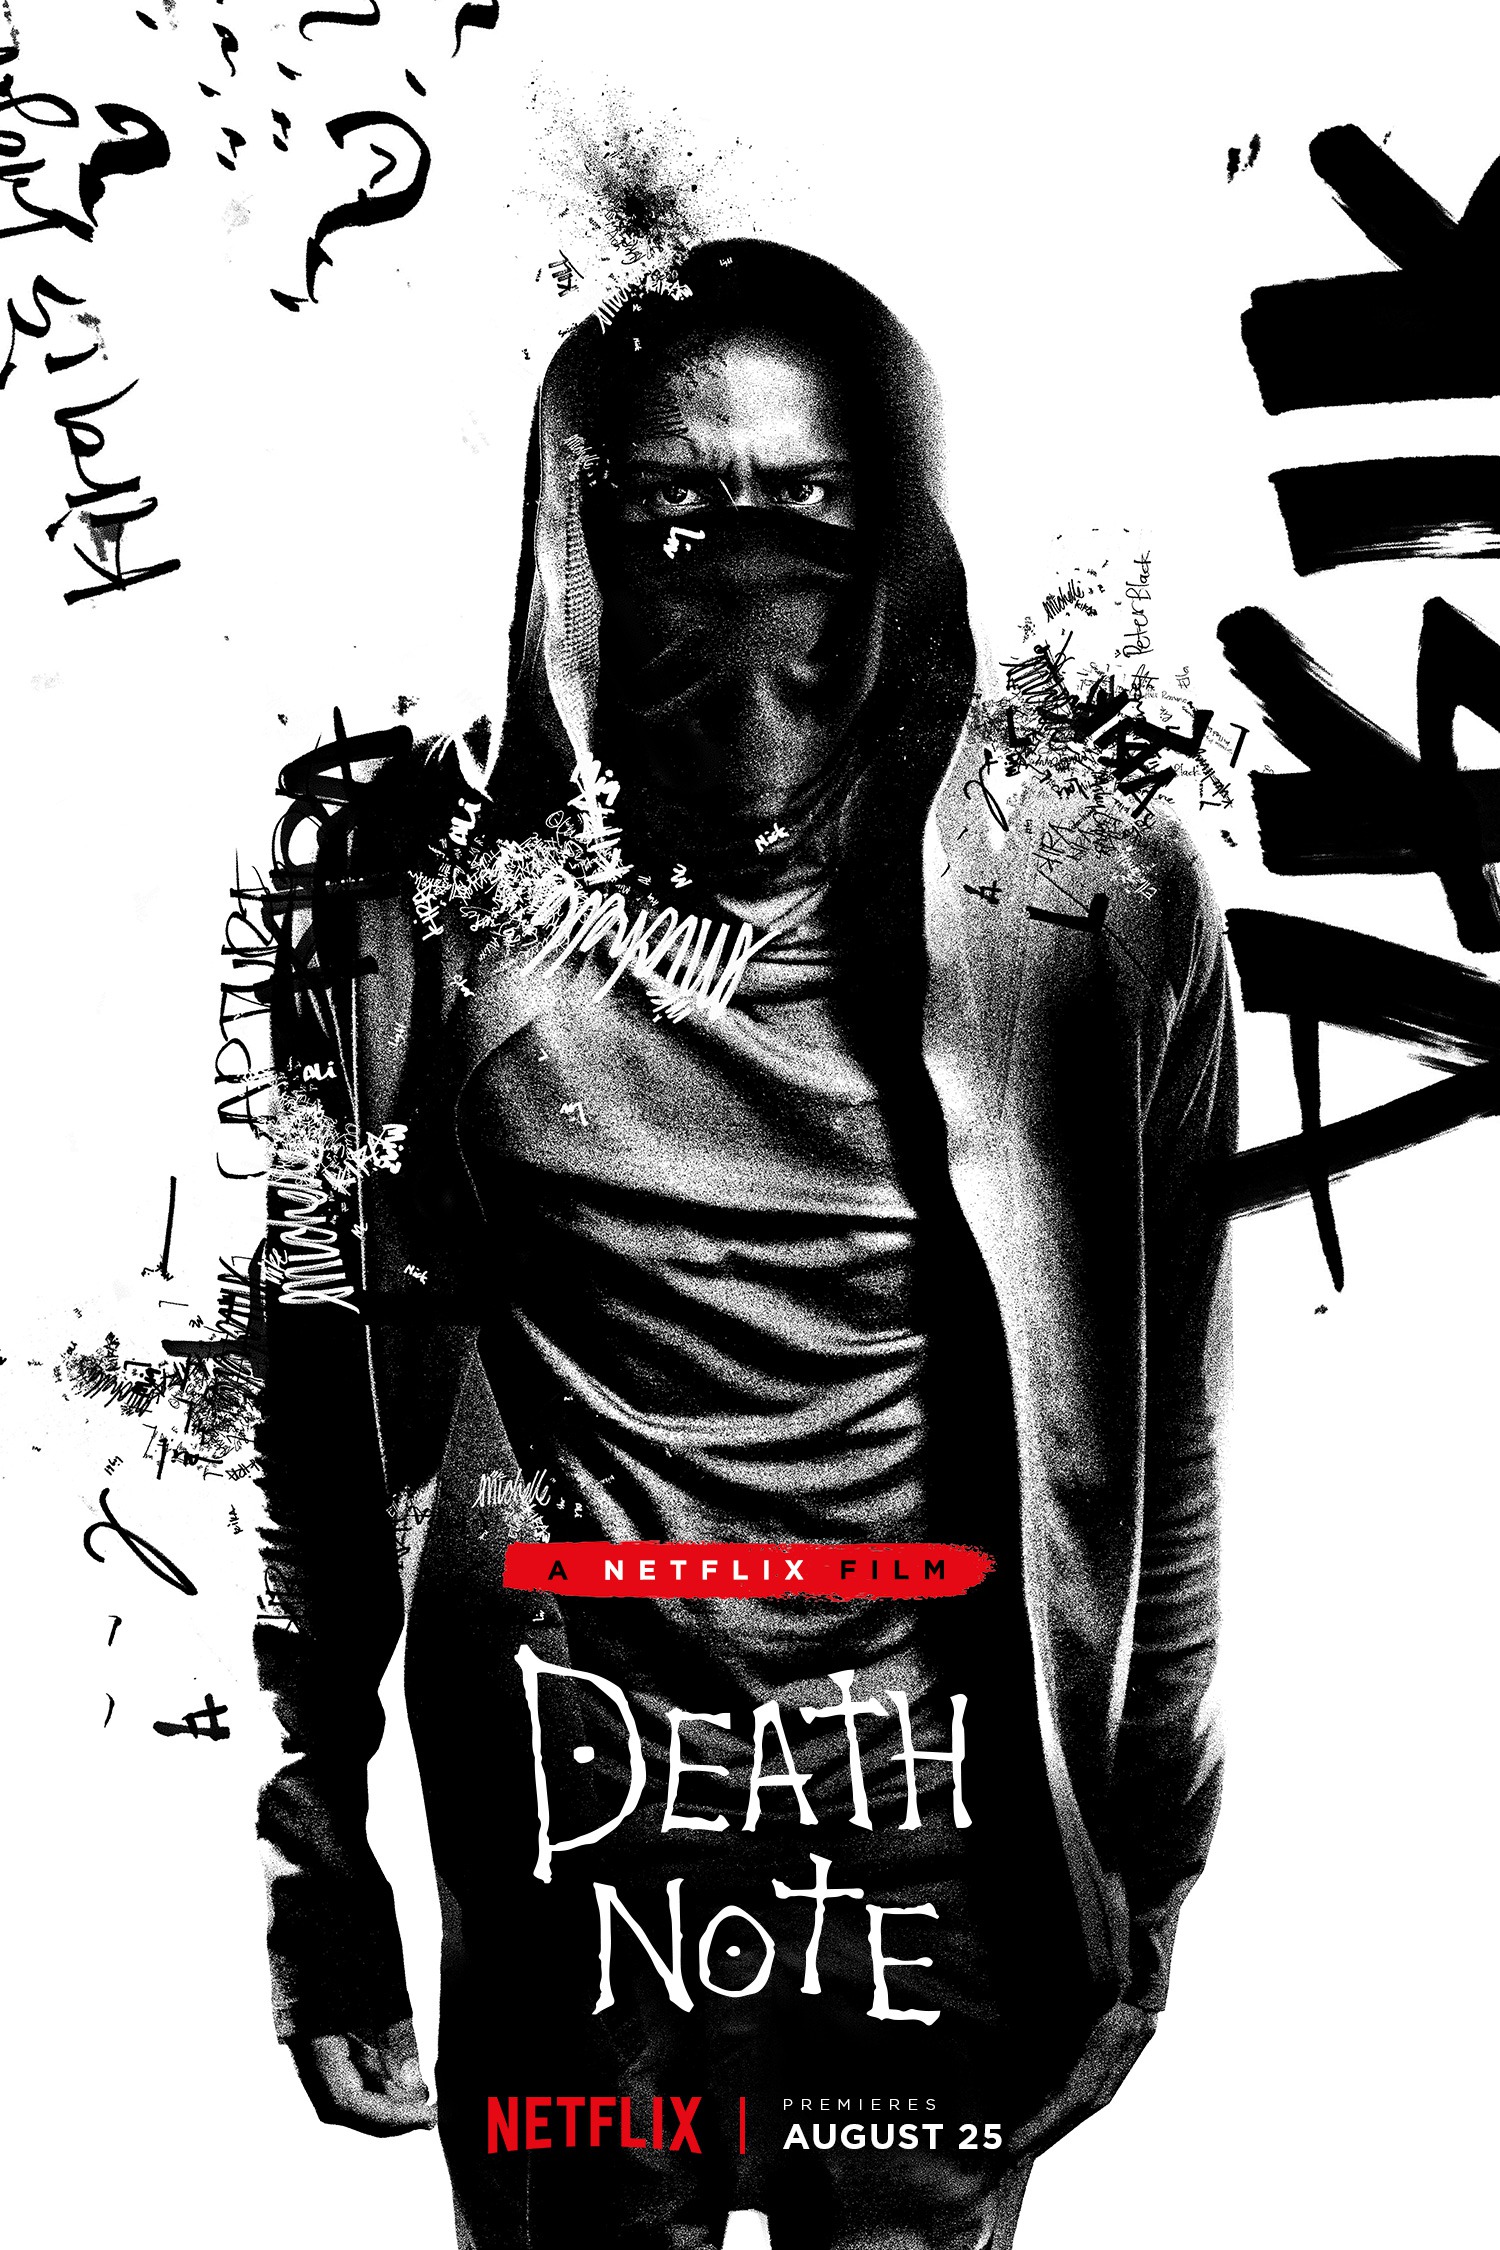 Death Note 2 da Netflix ainda vai acontecer